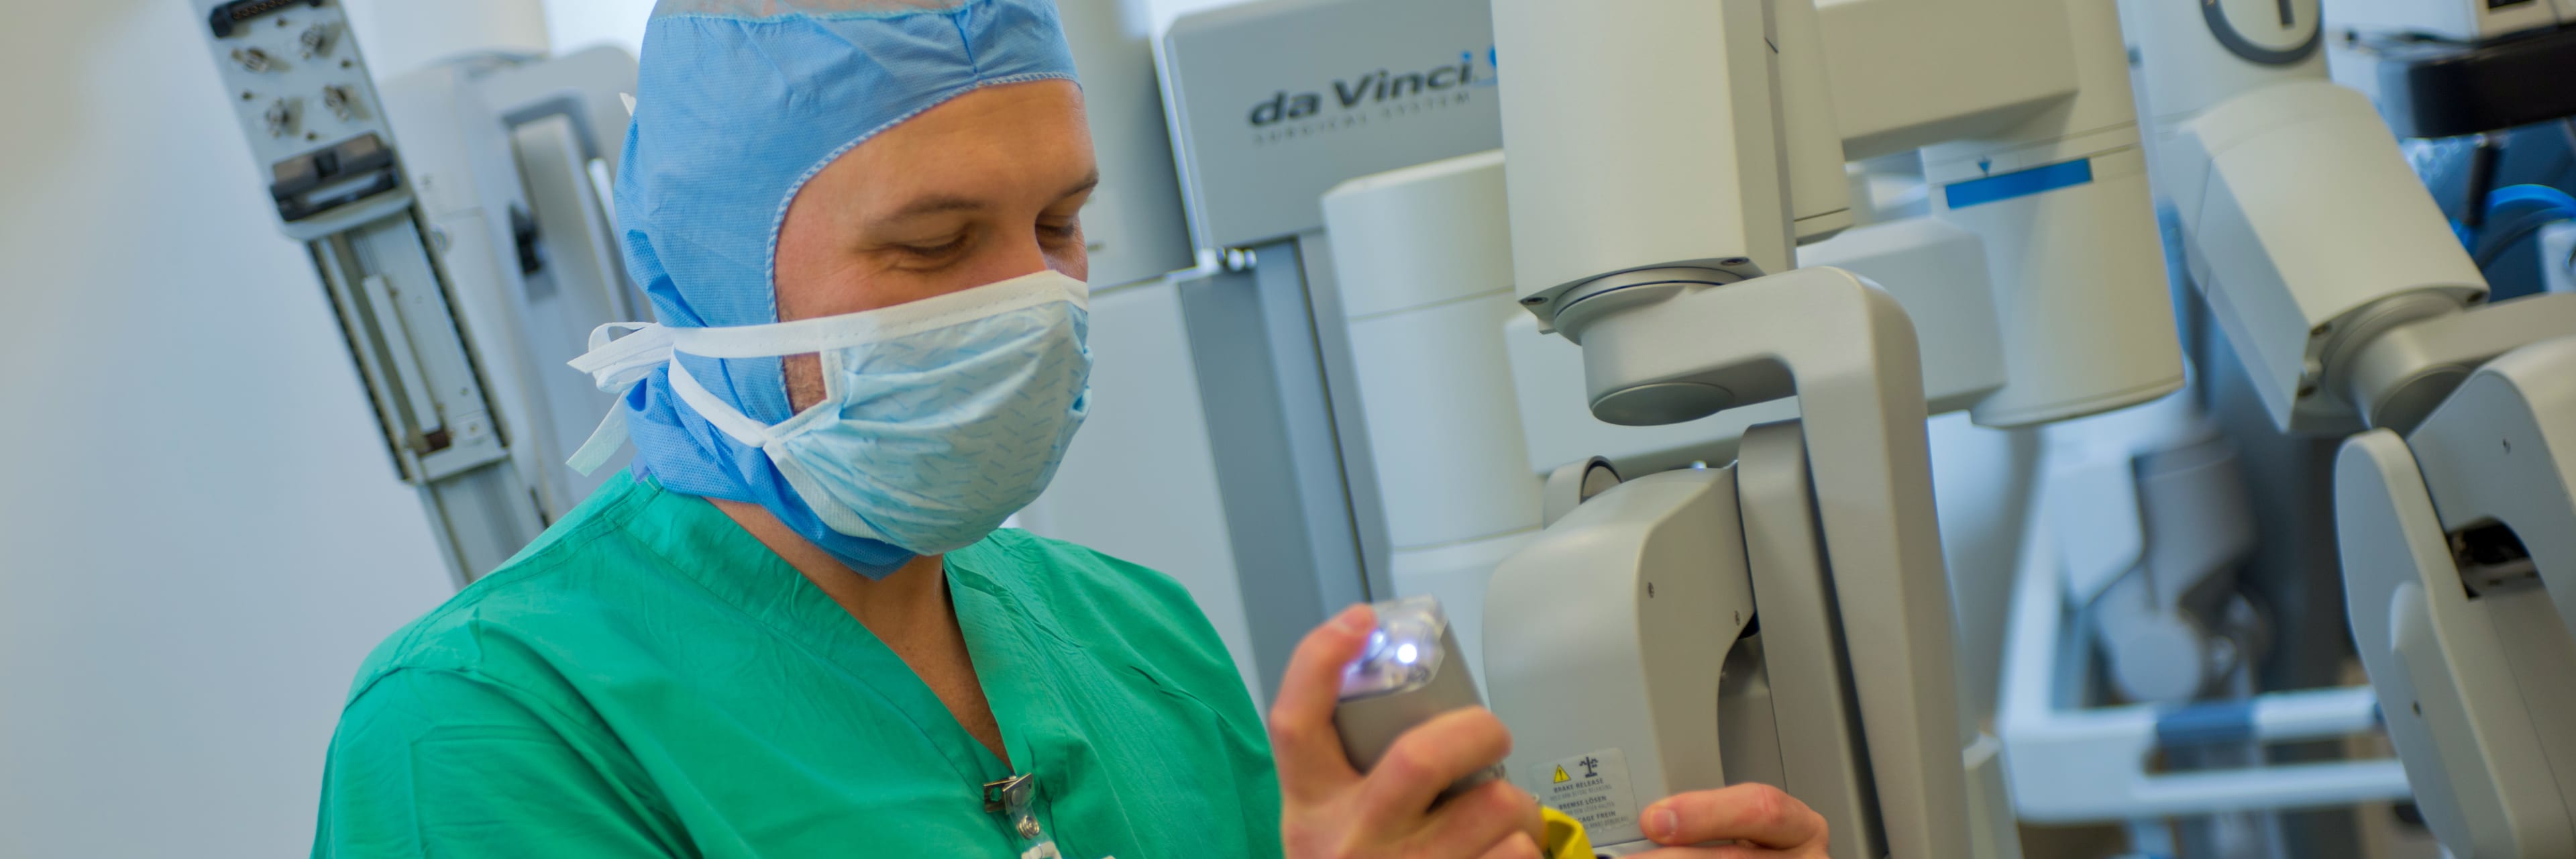 male health care worker preparing da Vinci machine for surgery